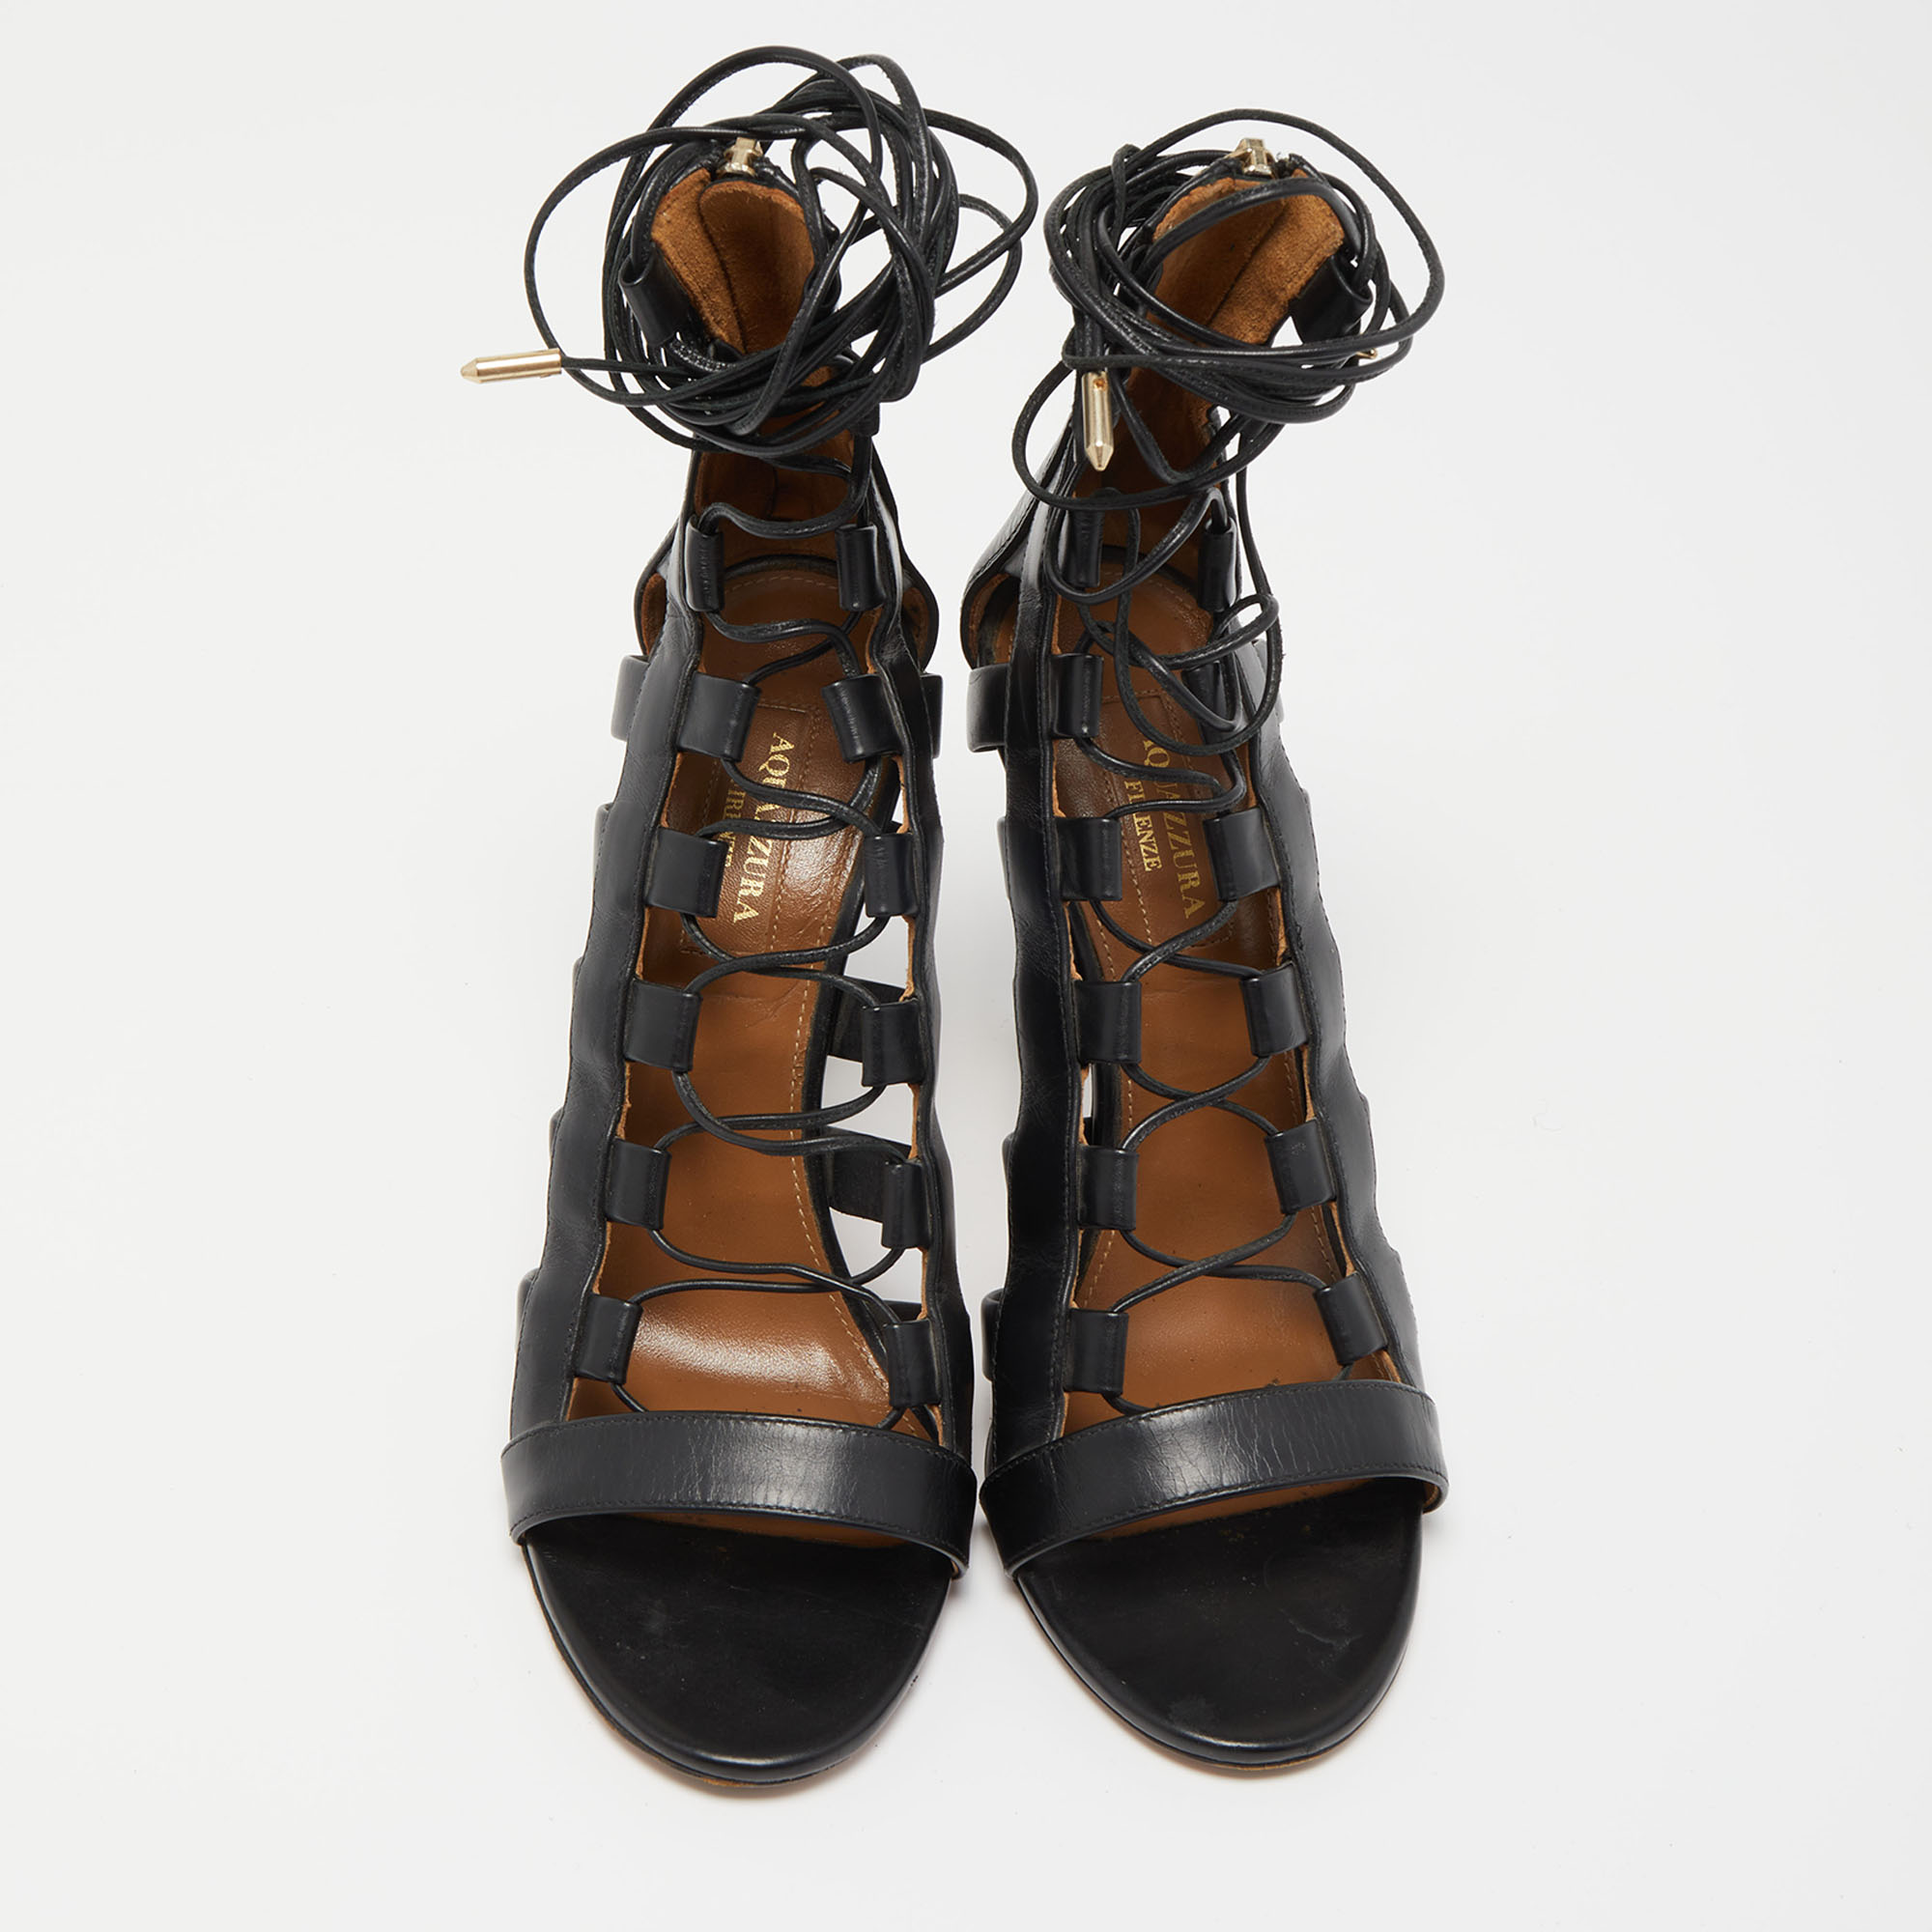 Aquazzura Black Leather Amazon Lace Up Open Toe Sandals Size 38